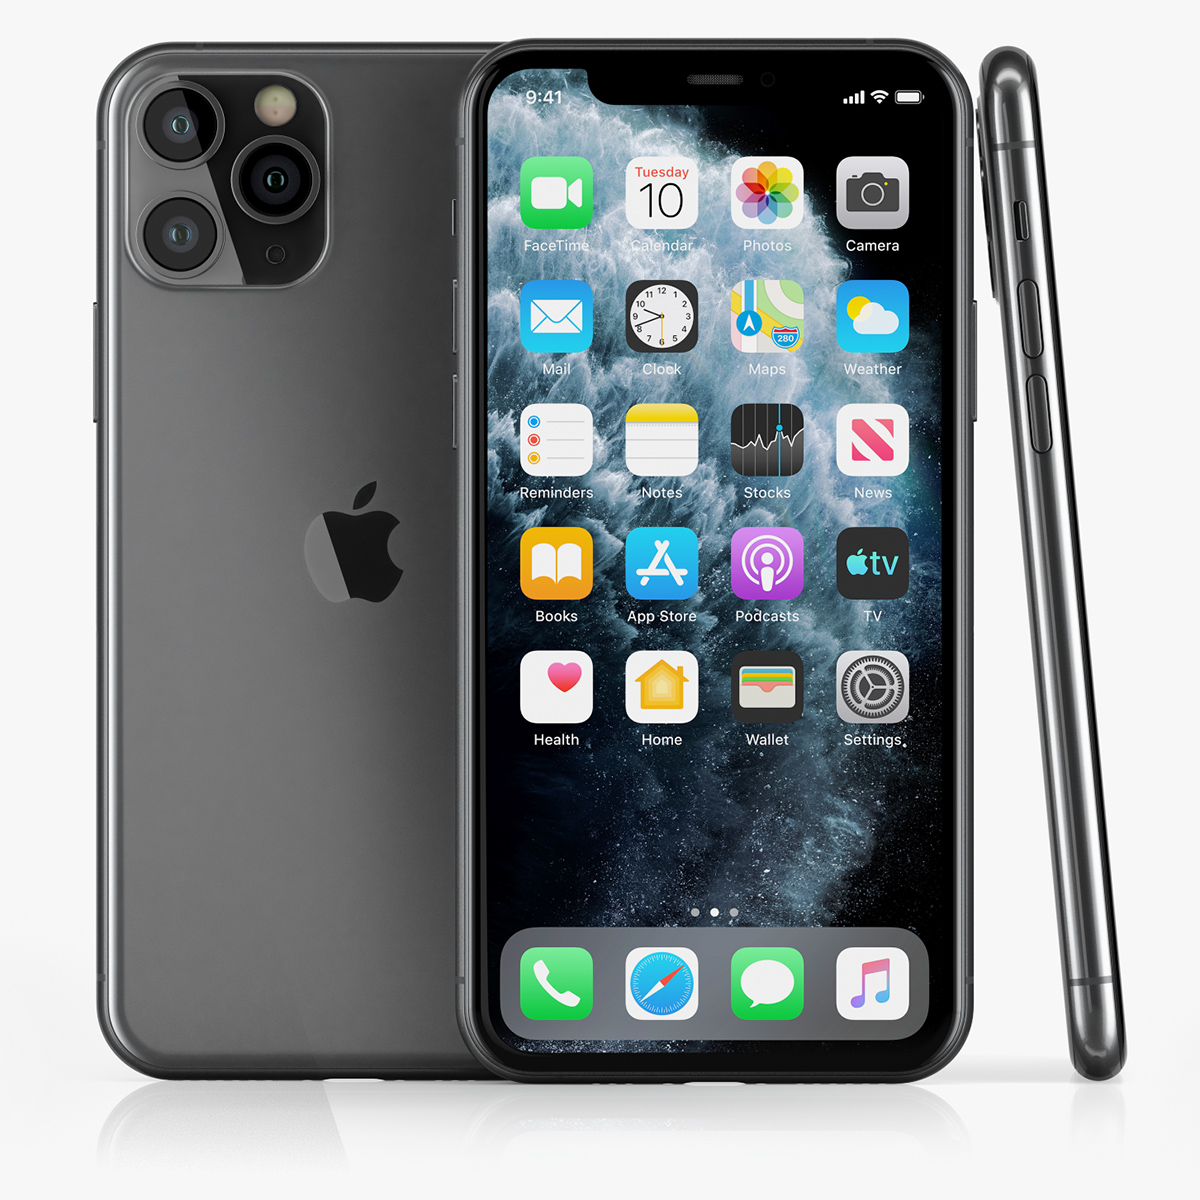 apple iphone 11 prototype 3D model https://static.turbosquid.com/Preview/2019/09/14__07_25_49/iPhone_11_Pro_00.jpg051238AC-1457-41A6-B400-EA4CF7320F7EDefault.jpg